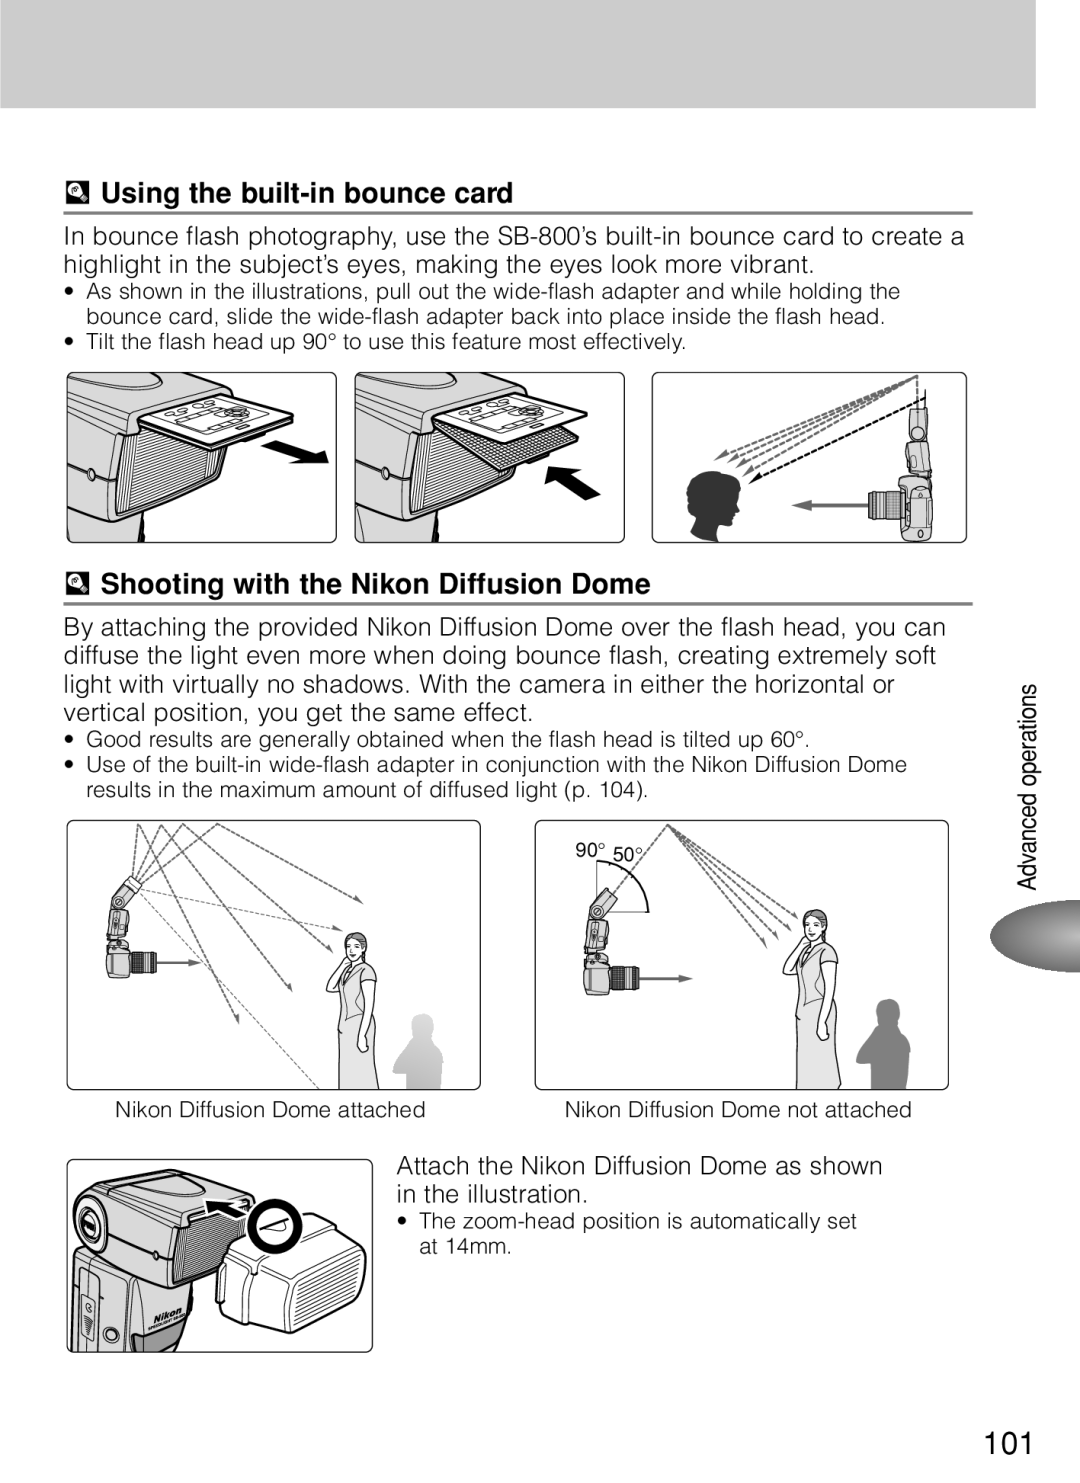 Nikon SB-800 instruction manual u Using the built-in bounce card, u Shooting with the Nikon Diffusion Dome 